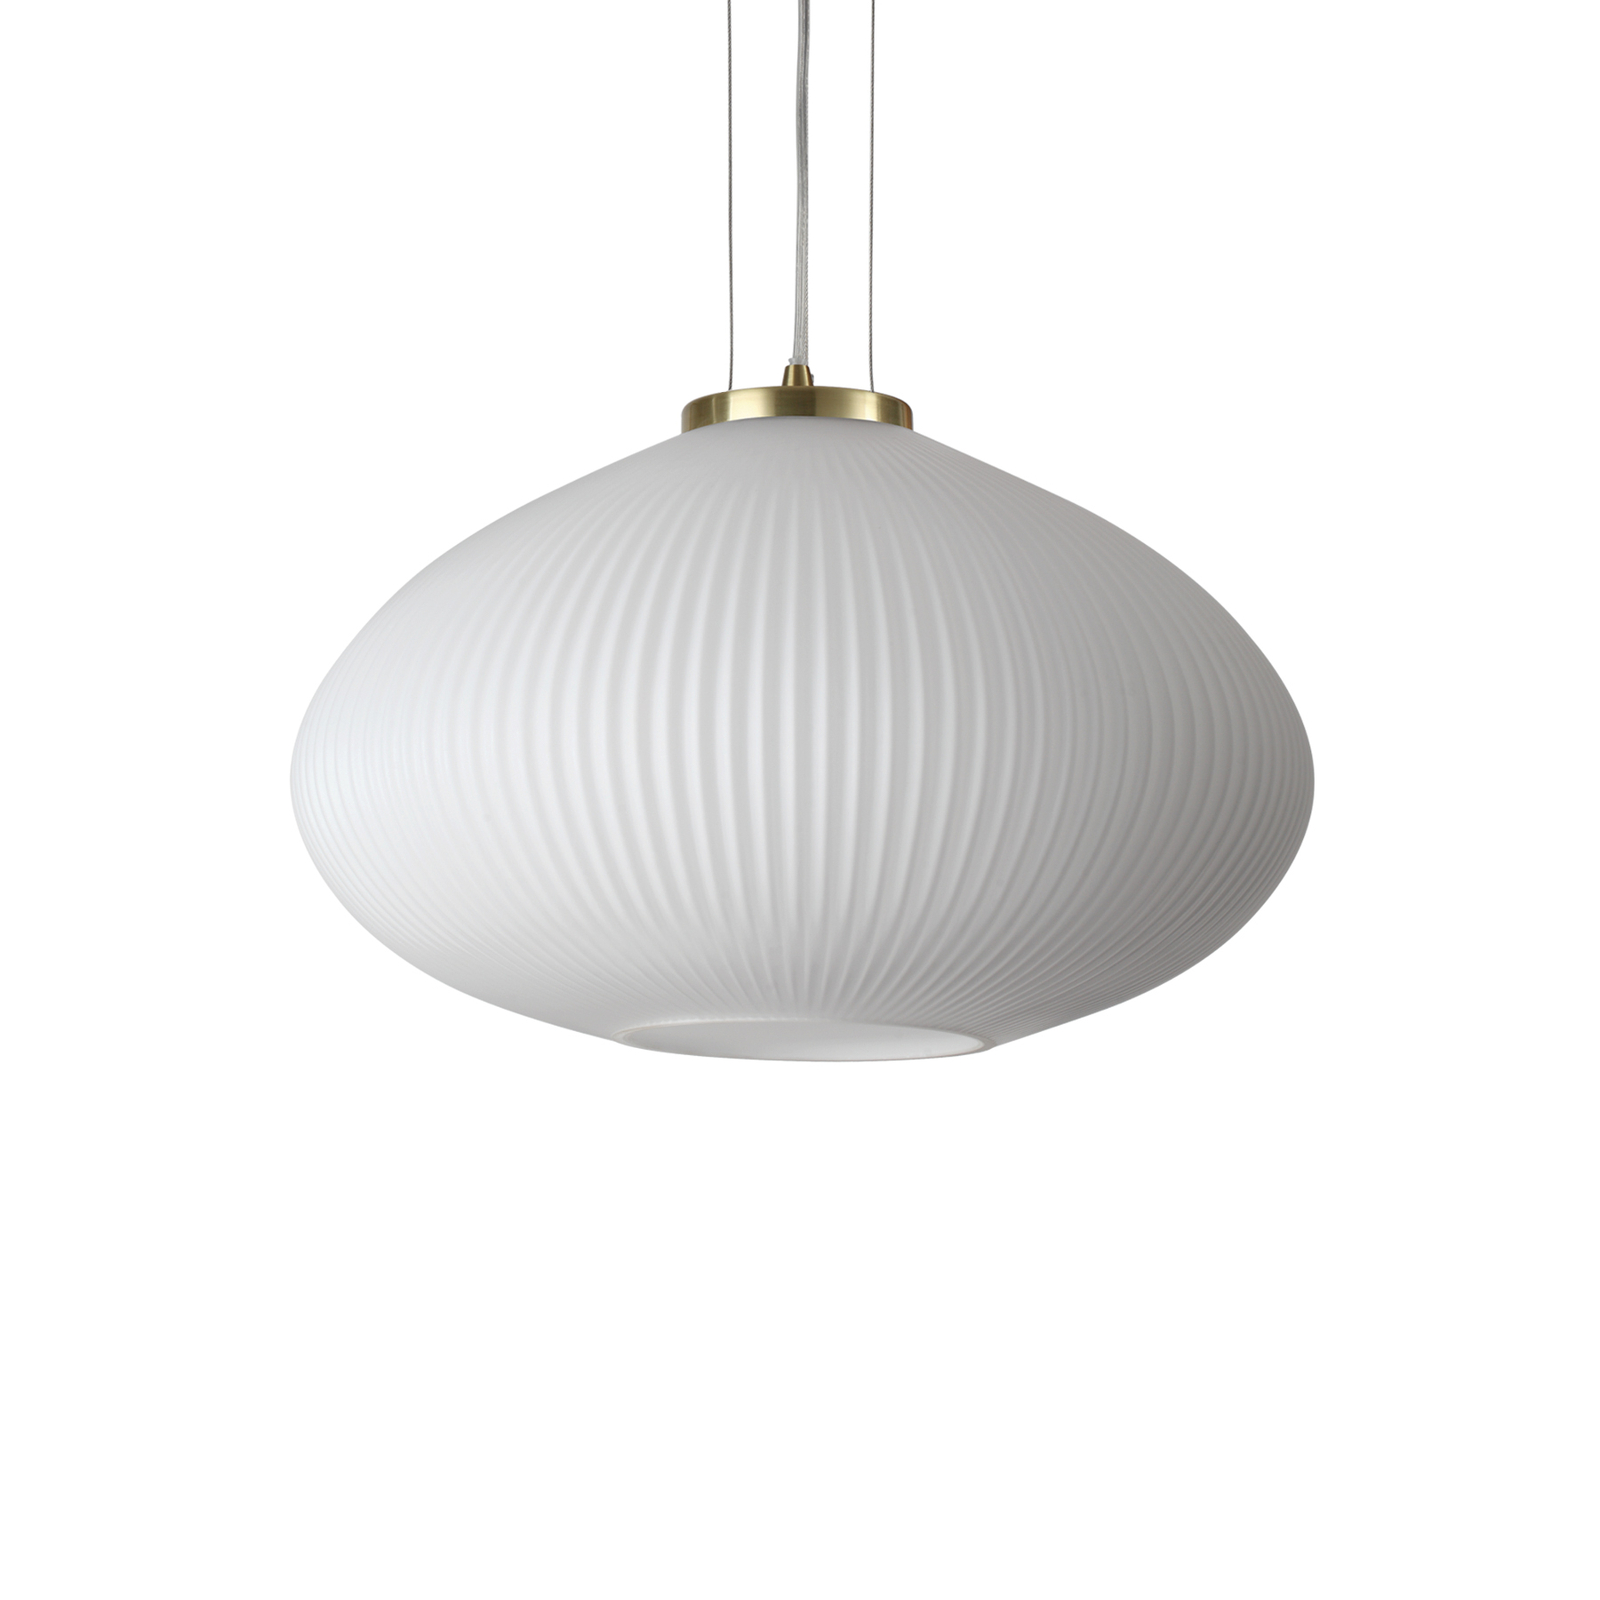 Ideal Lux Plisse hanglamp Ø 45 cm